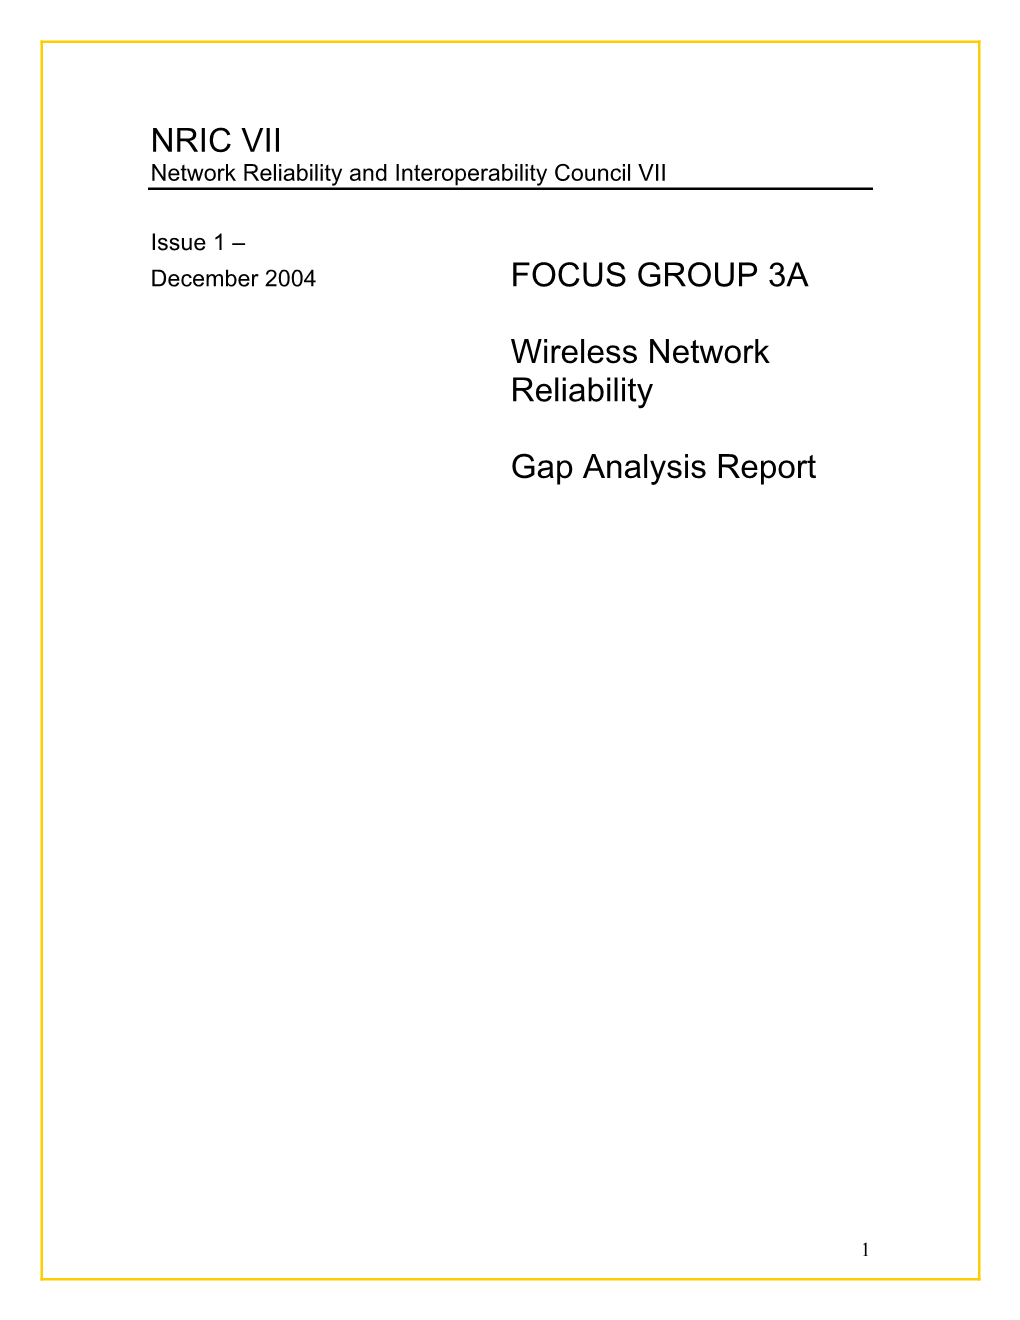 Gap Analysis Report